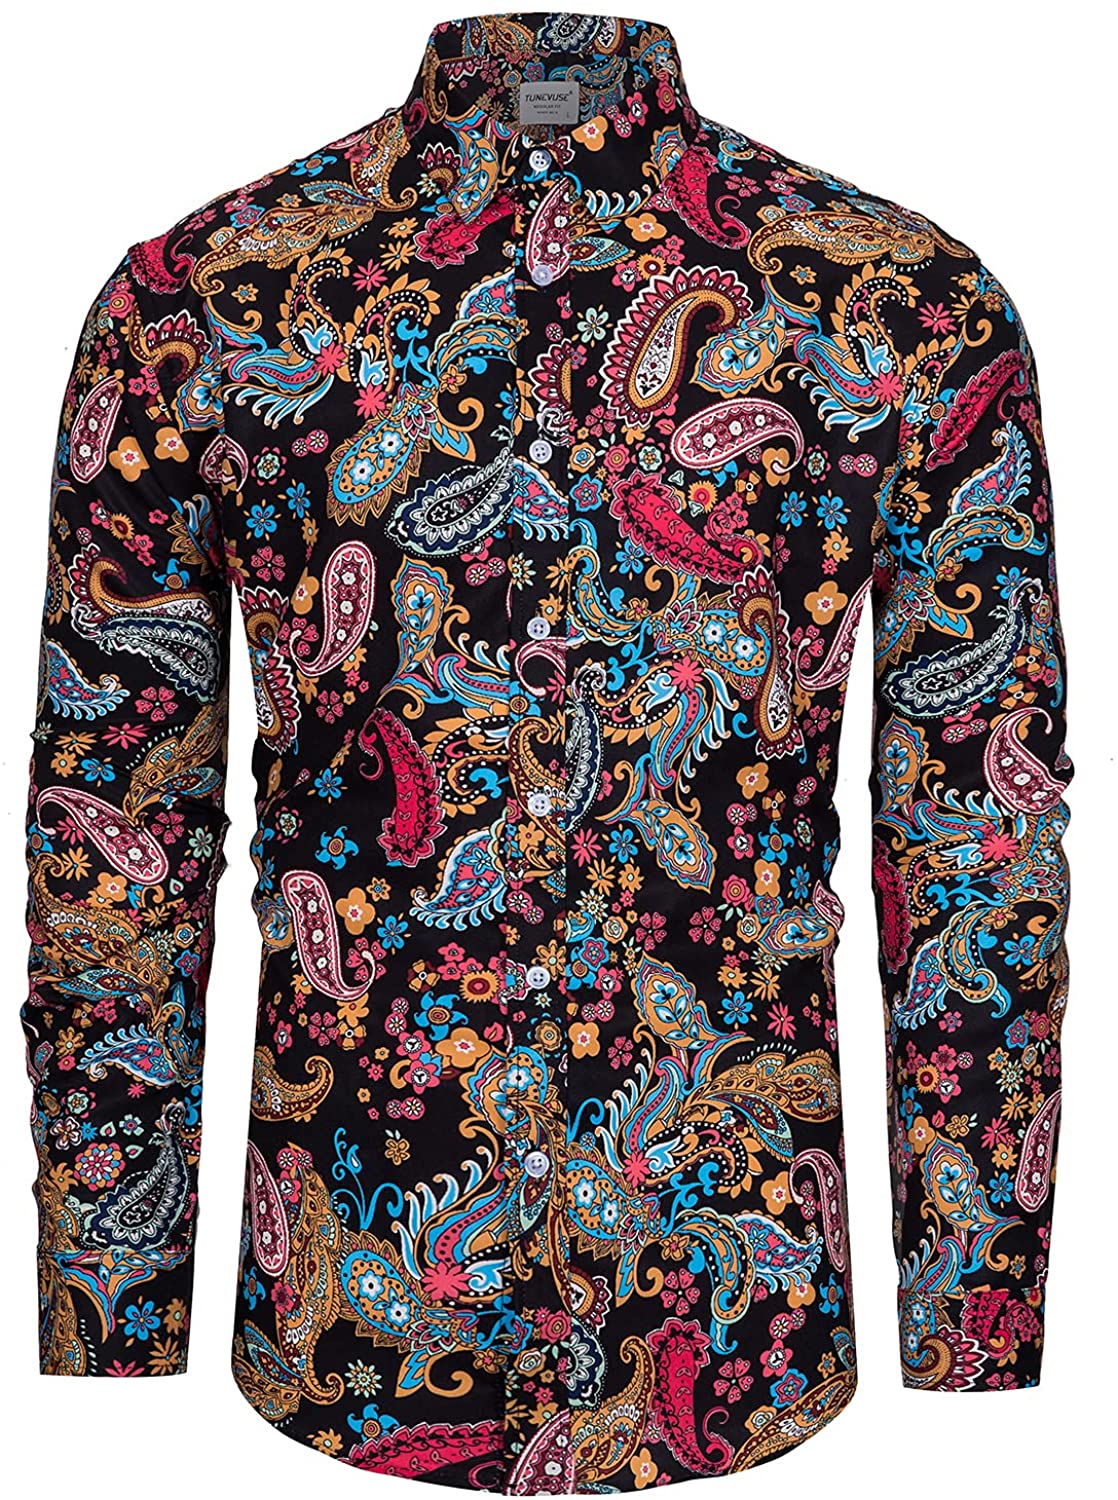 TUNEVUSE Mens Paisley Dress Shirt Floral Print Long Sleeve Button Down 70s Pattern Shirt